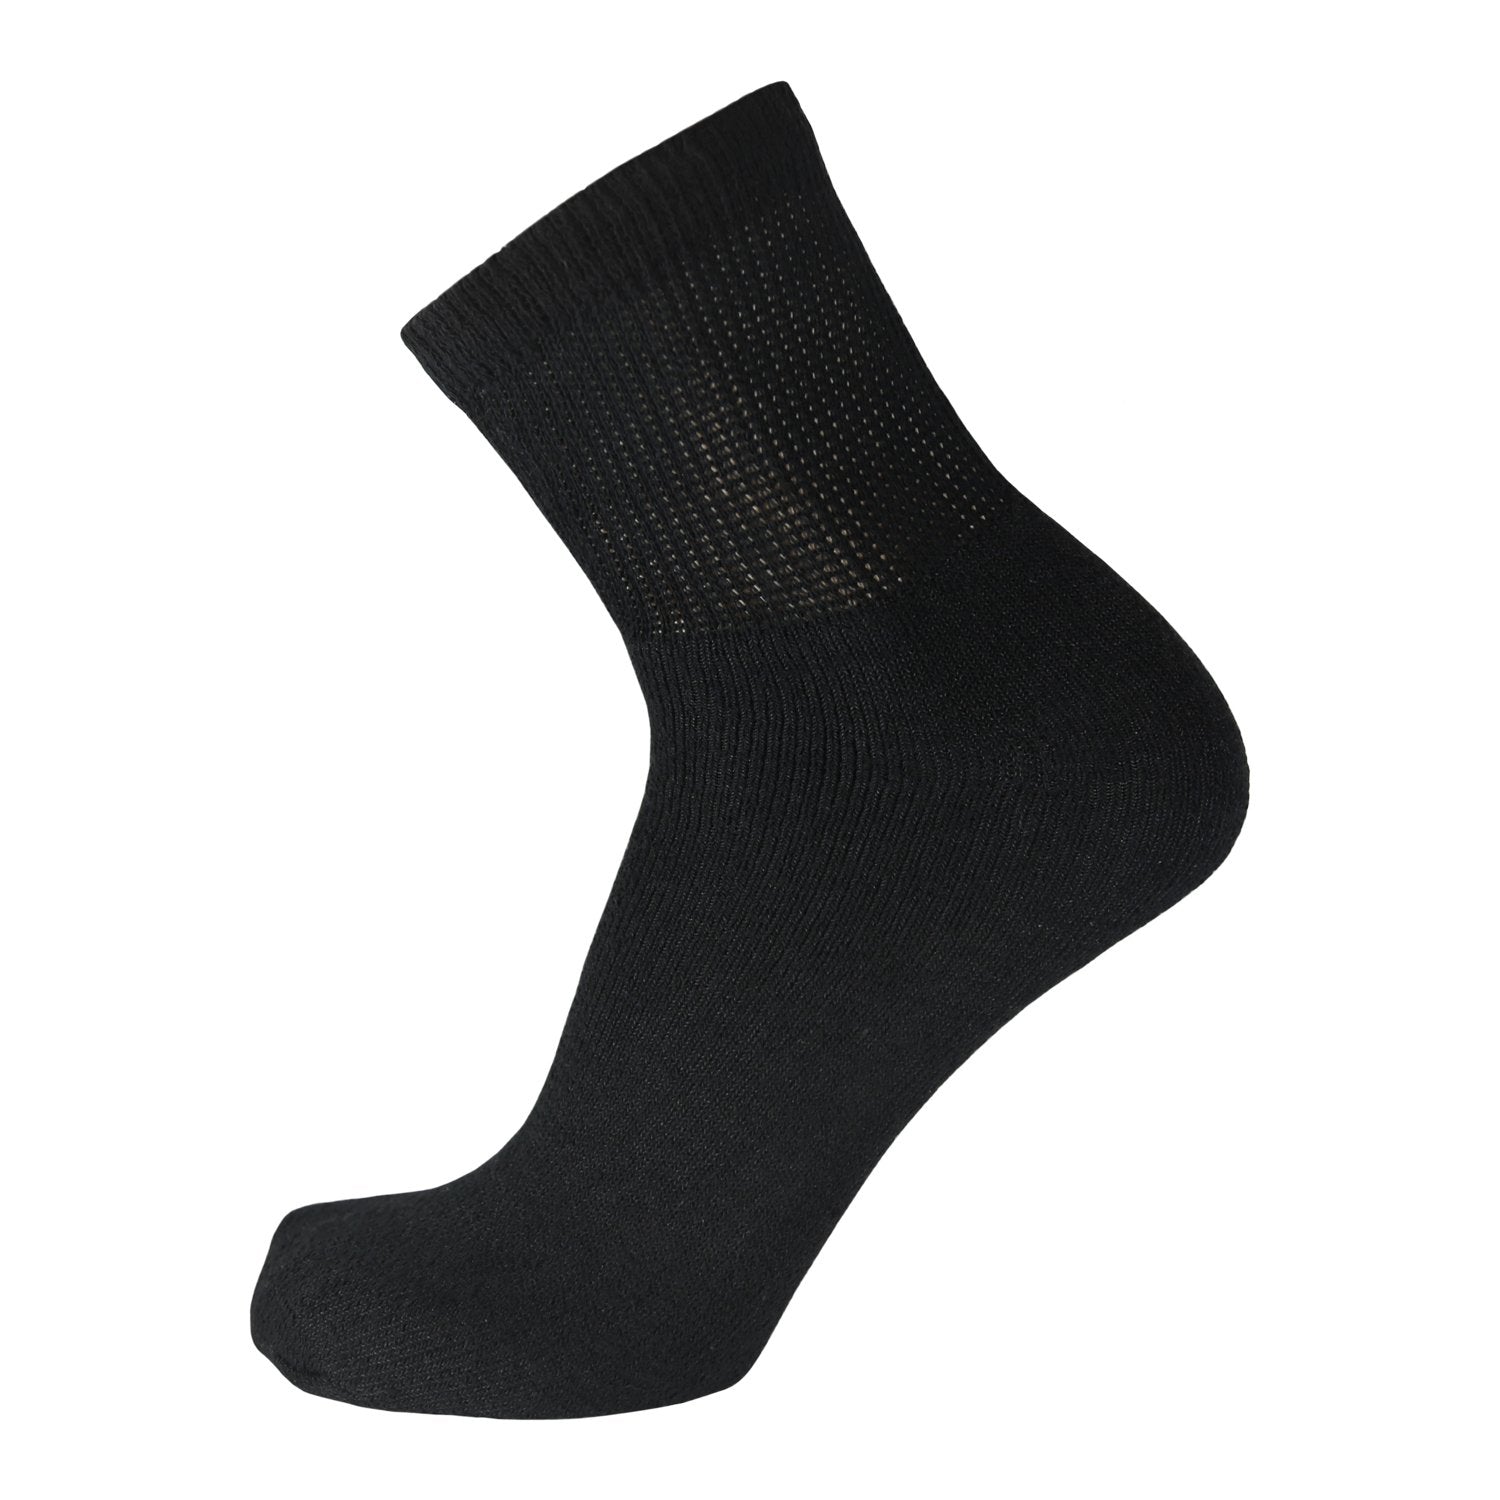 Black Non Binding Cotton Diabetic Ankle Socks